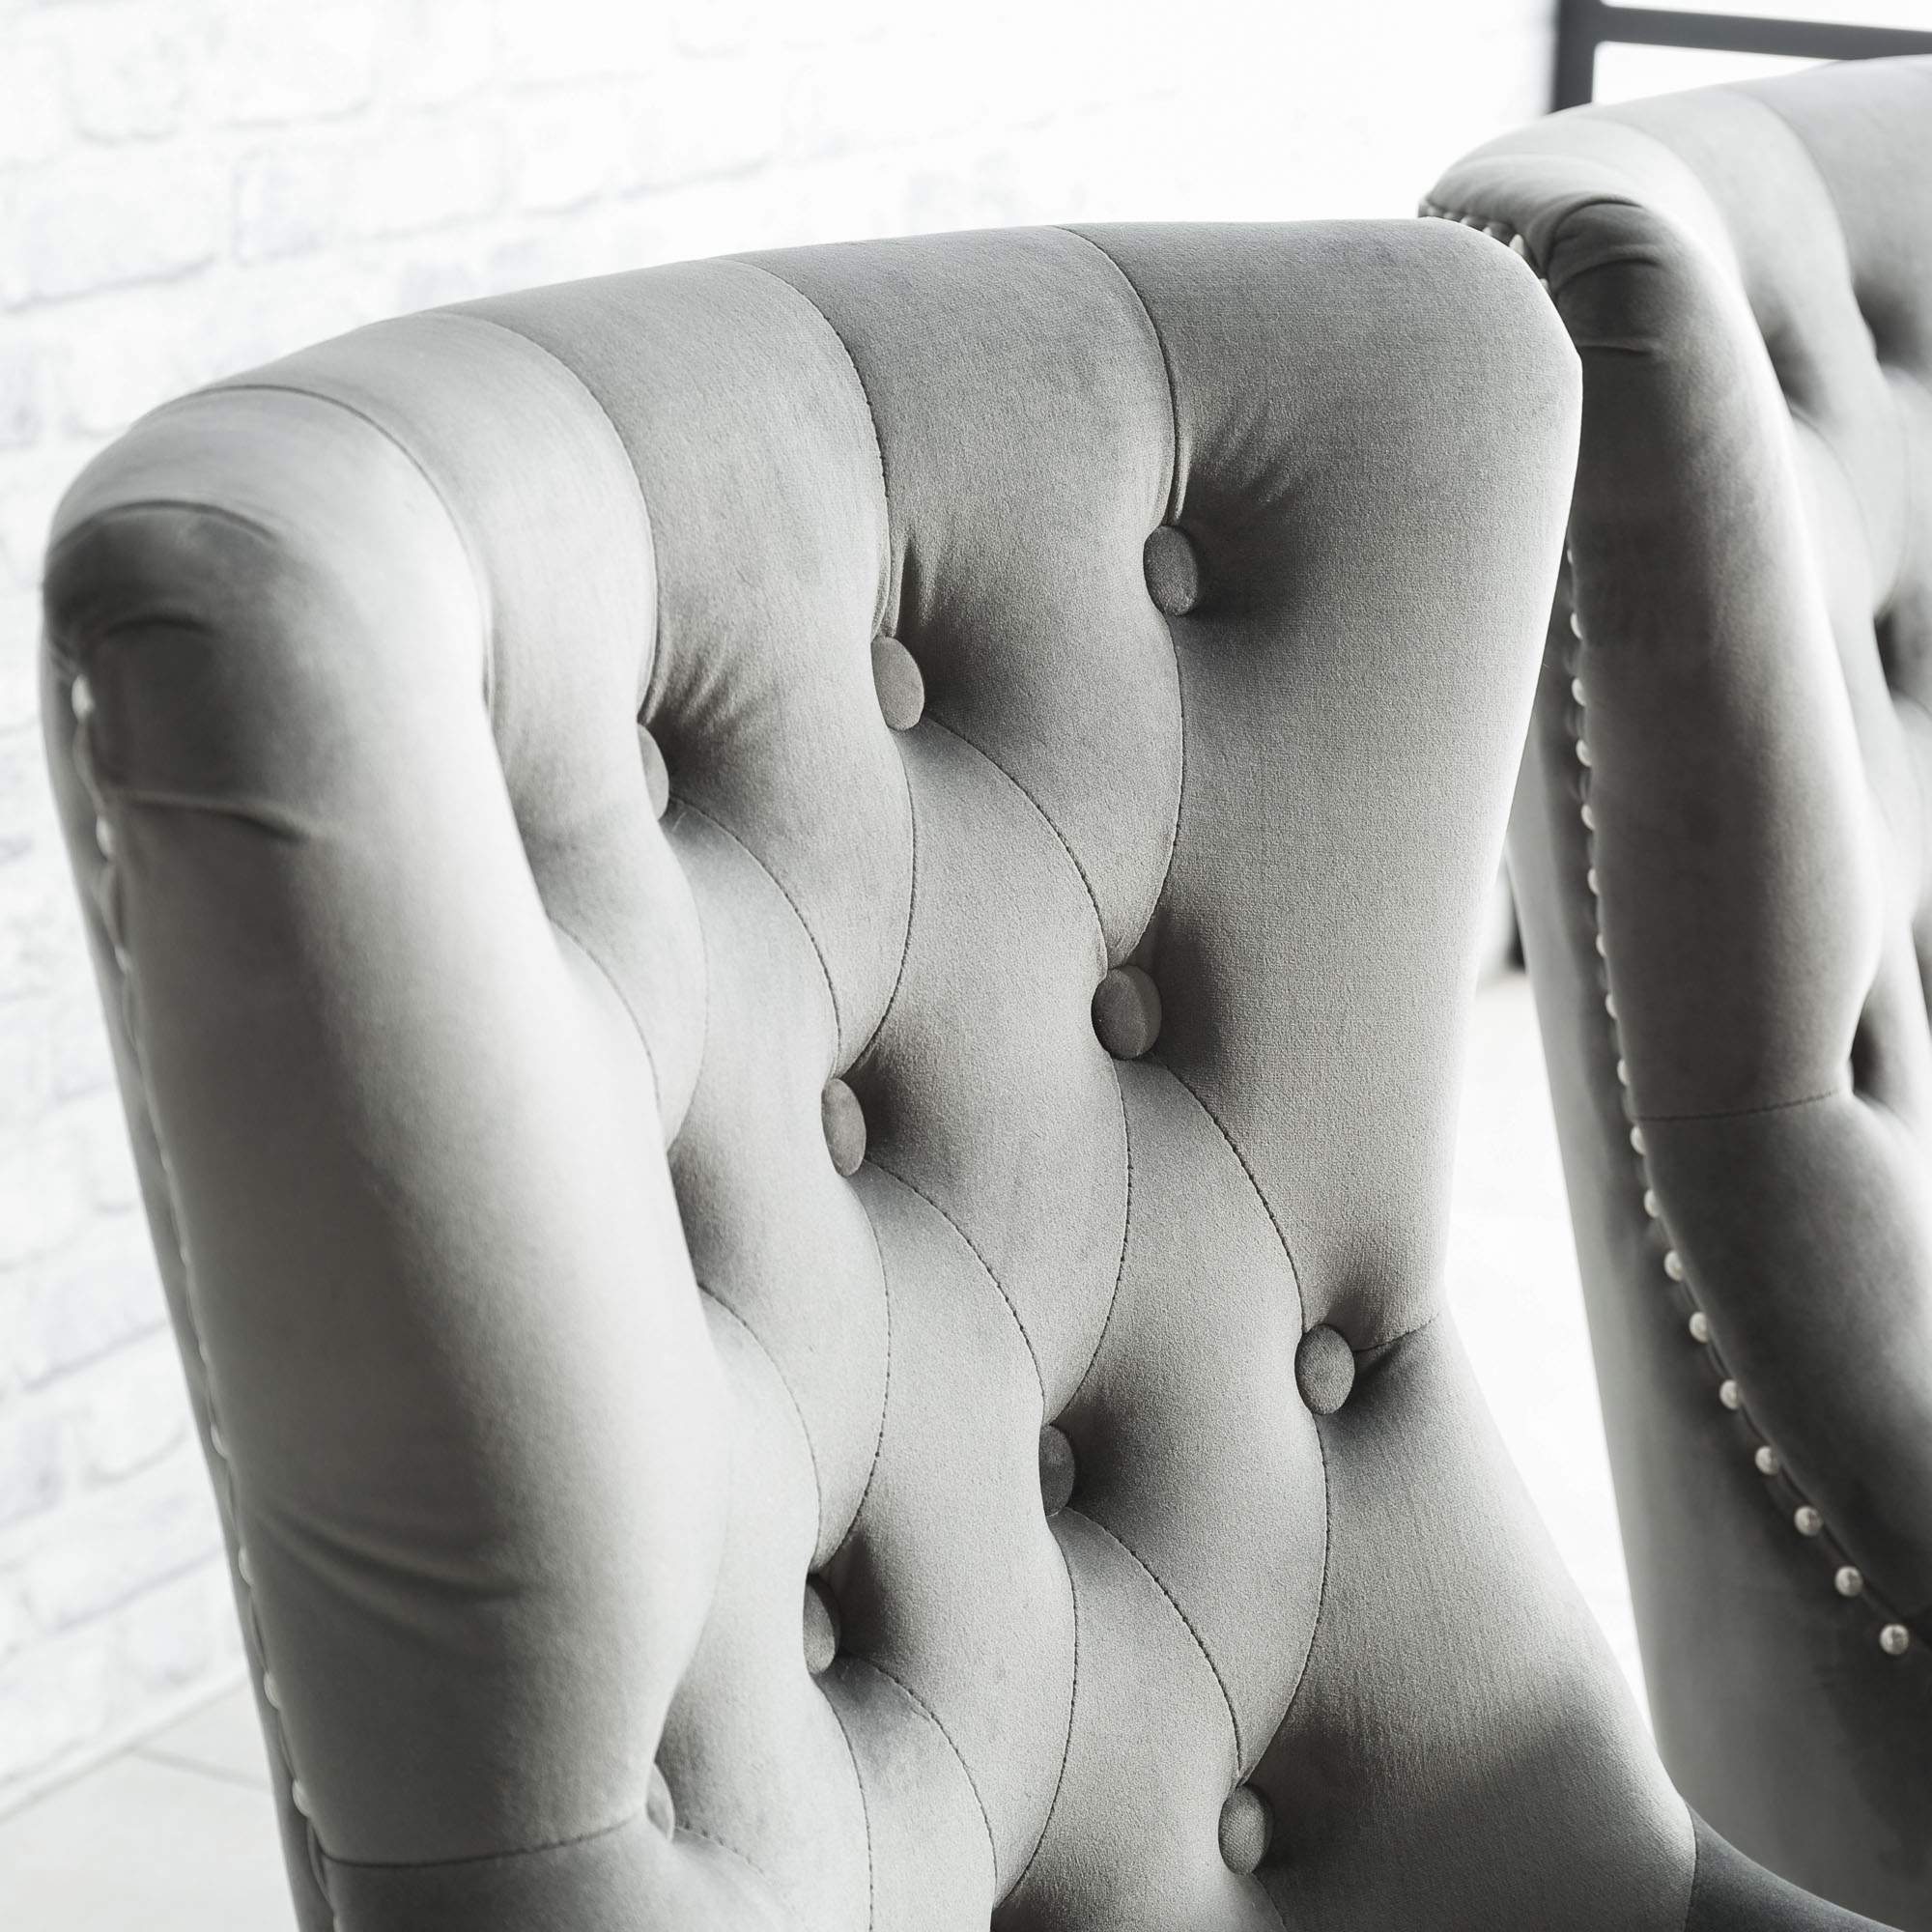 Set of 8 Knightsbridge Grey Brushed Velvet Dining Chair – Steel Legs